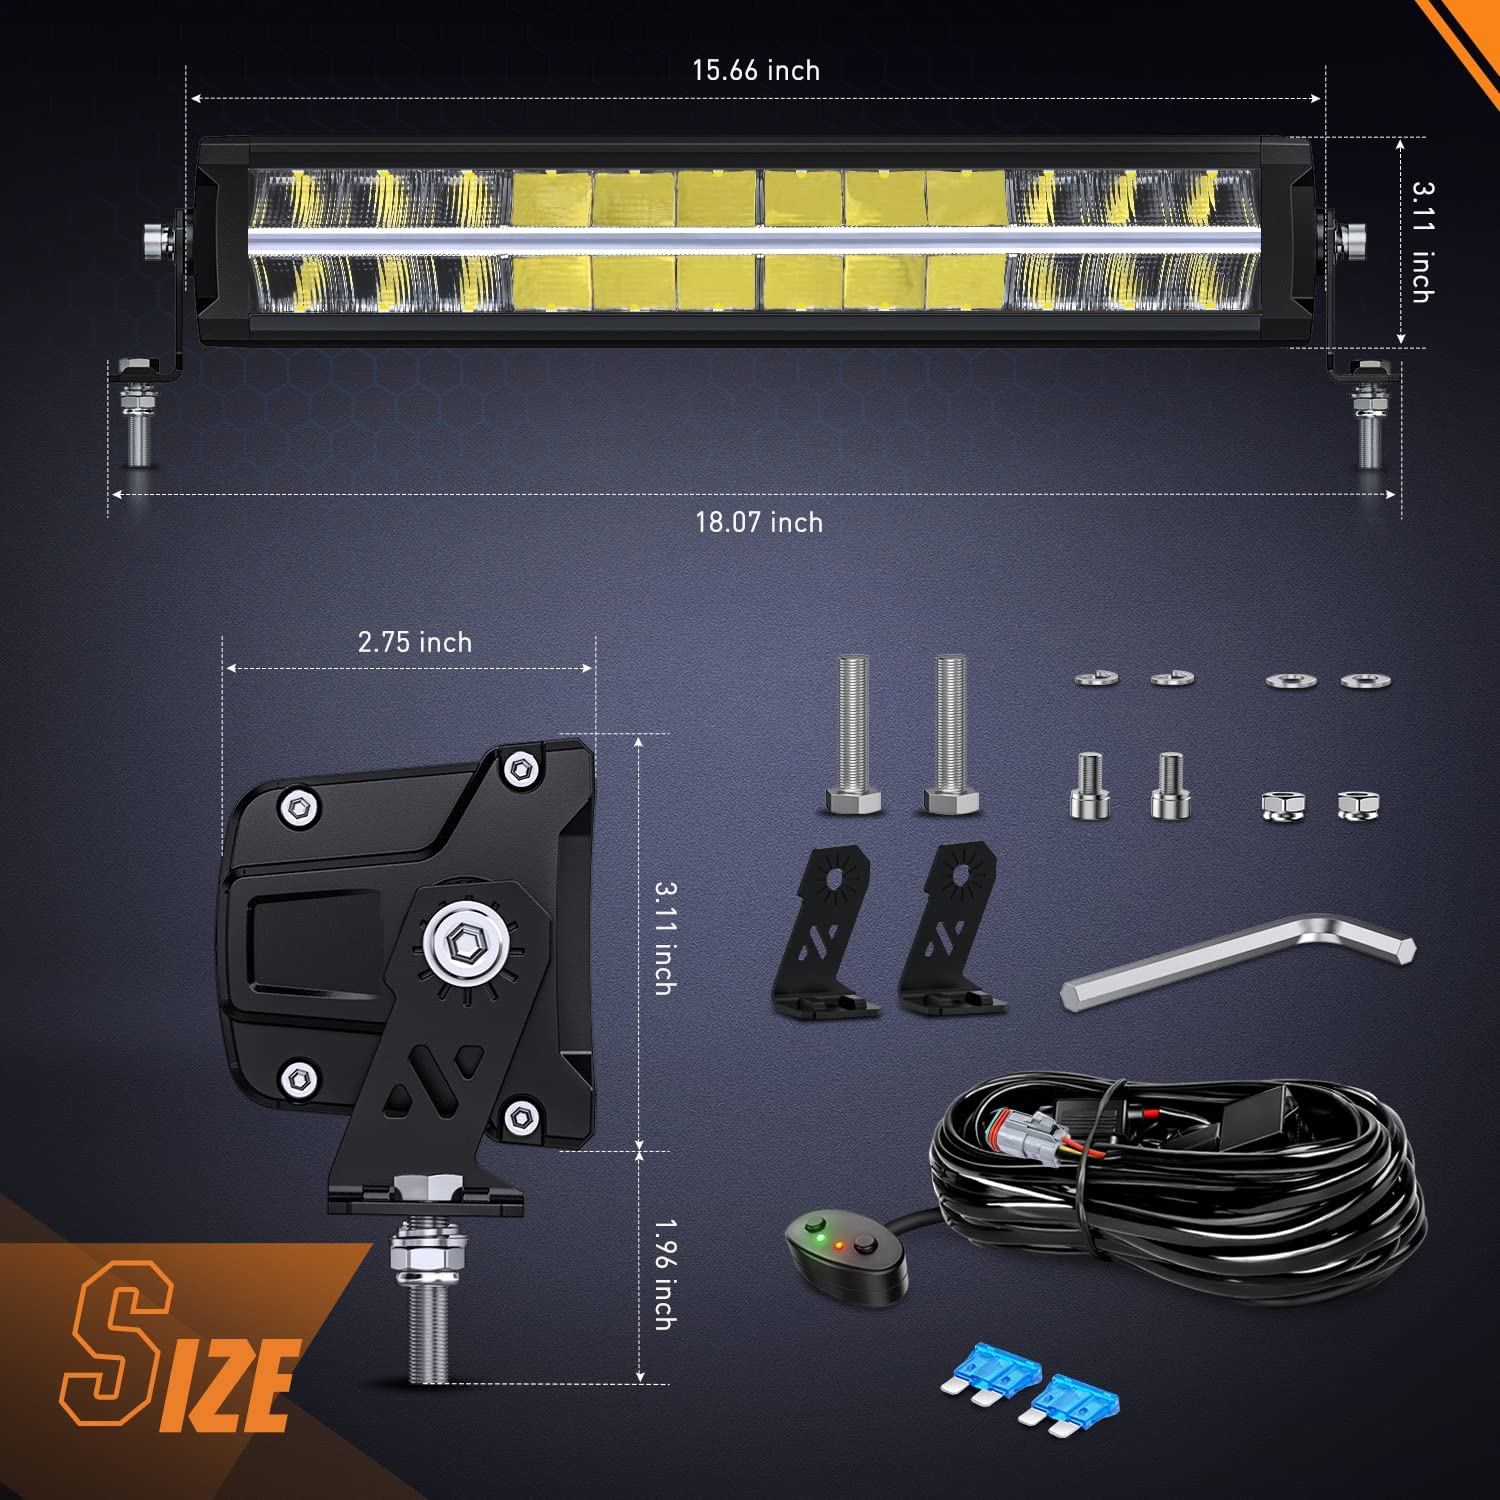 16" 120W 12400LM Anti-Glare Spot/Flood DRL LED Light Bar Kit | 16AWG Wire DT Switch Nilight